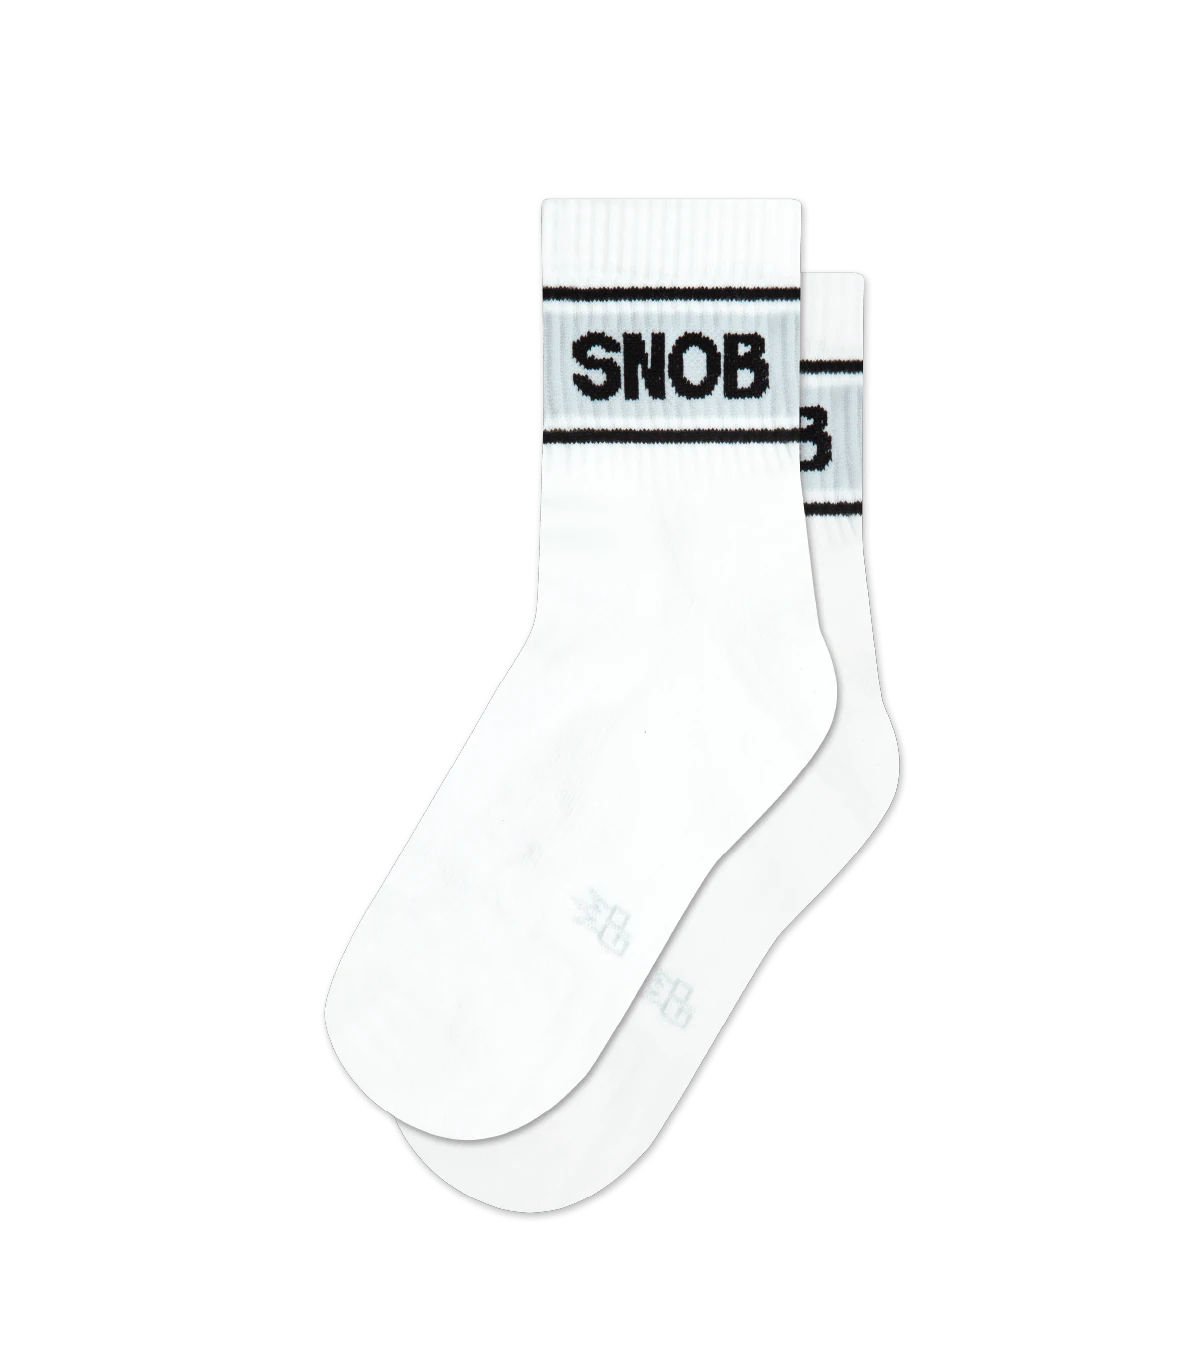 Snob-short